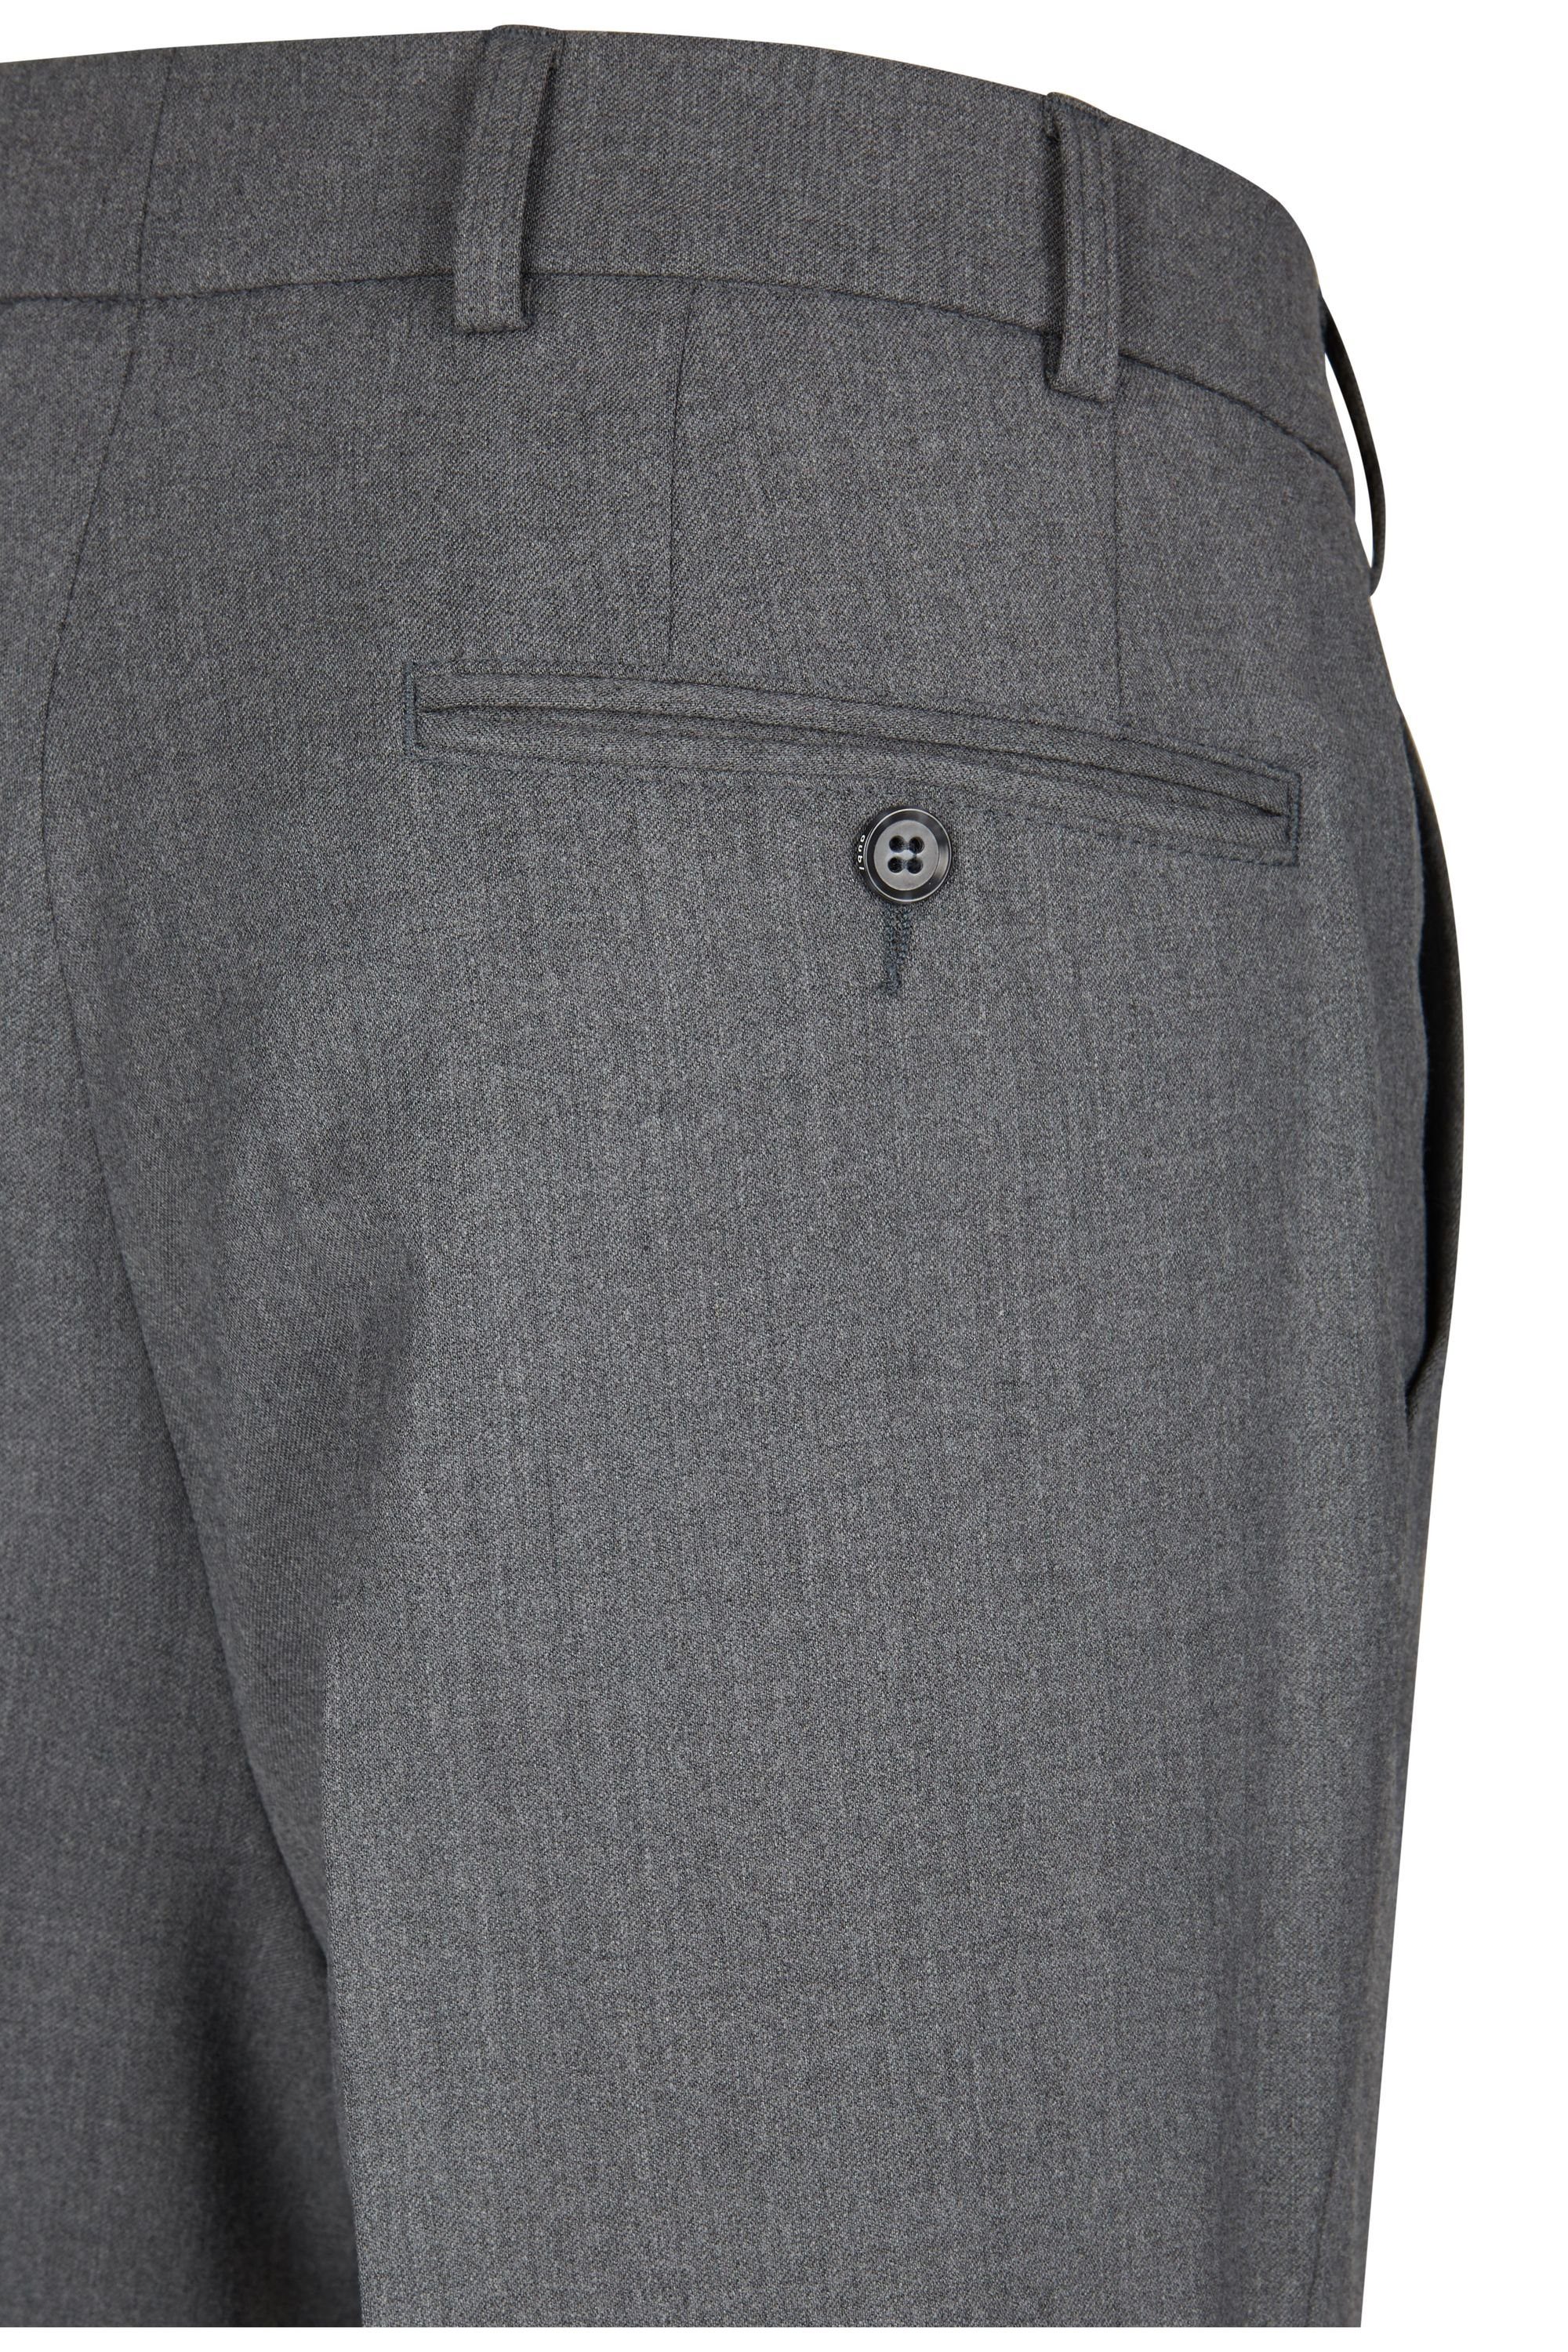 Stoffhose Herren Front (54) aubi Fit Businesshose Anzughose Modell Perfect 26 Flat grau aubi: